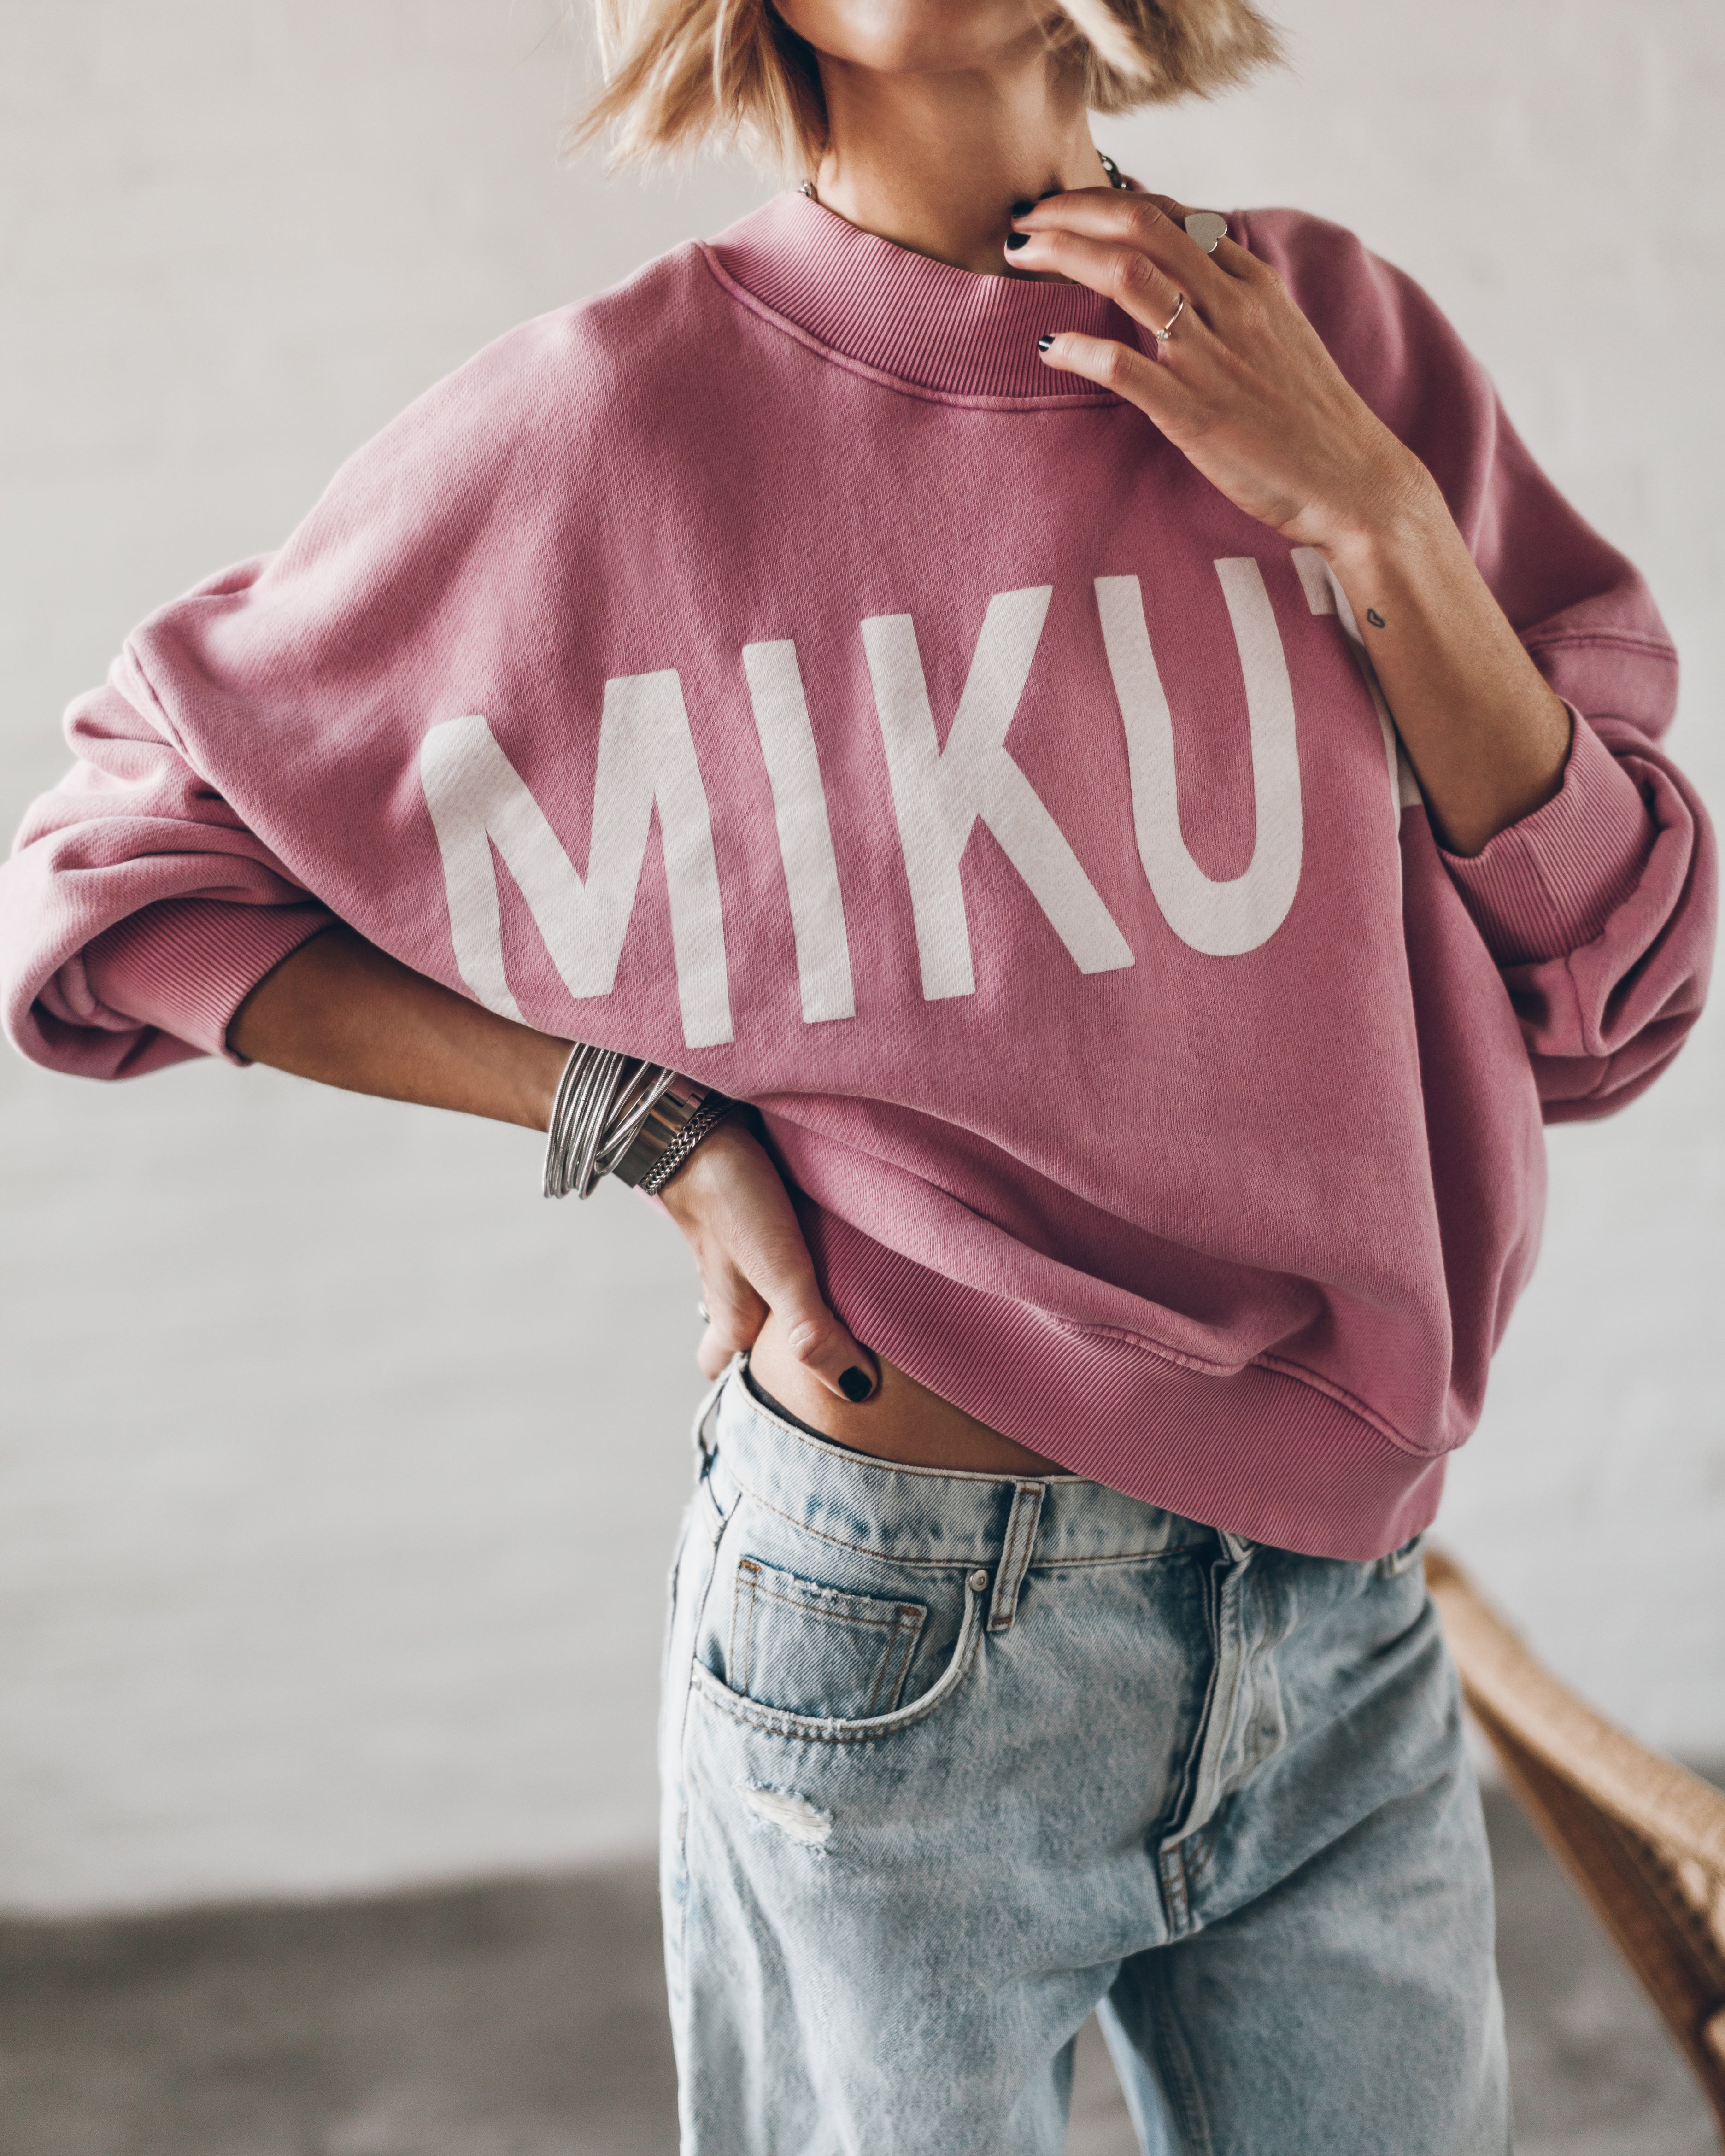 The Pink Faded Mikuta Sweater